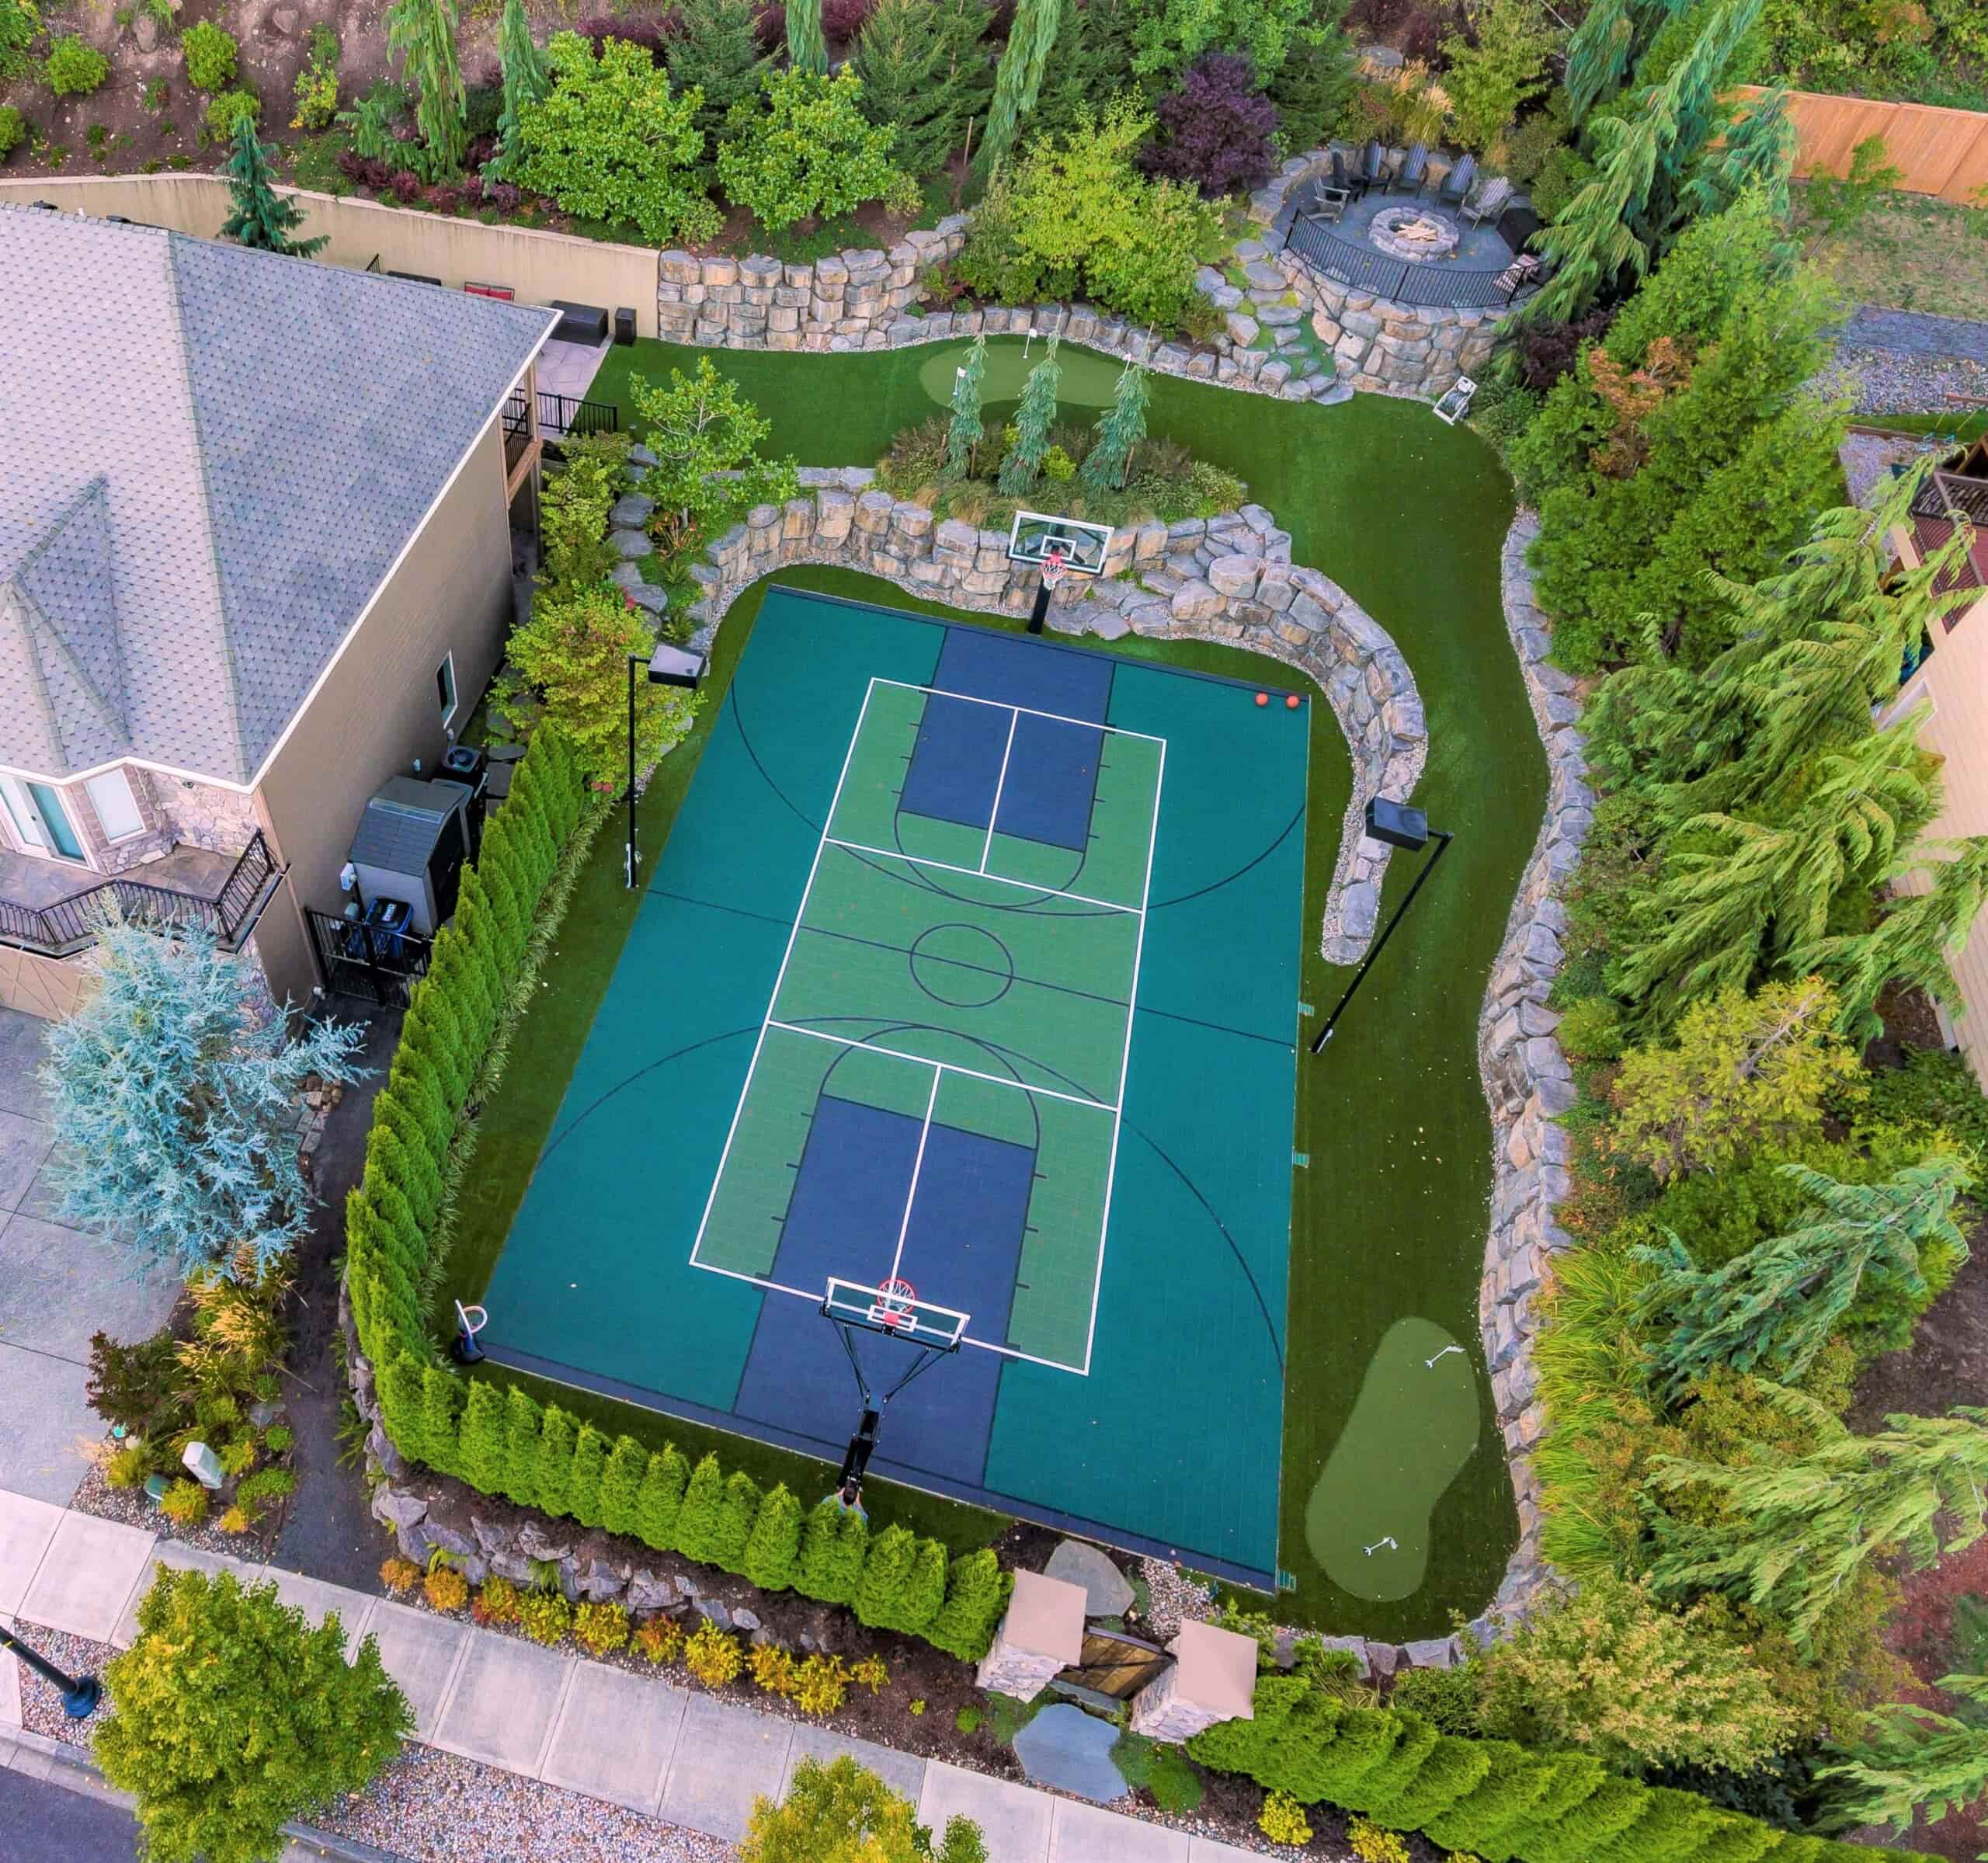 Backyard Badminton Court - Landscaping Network